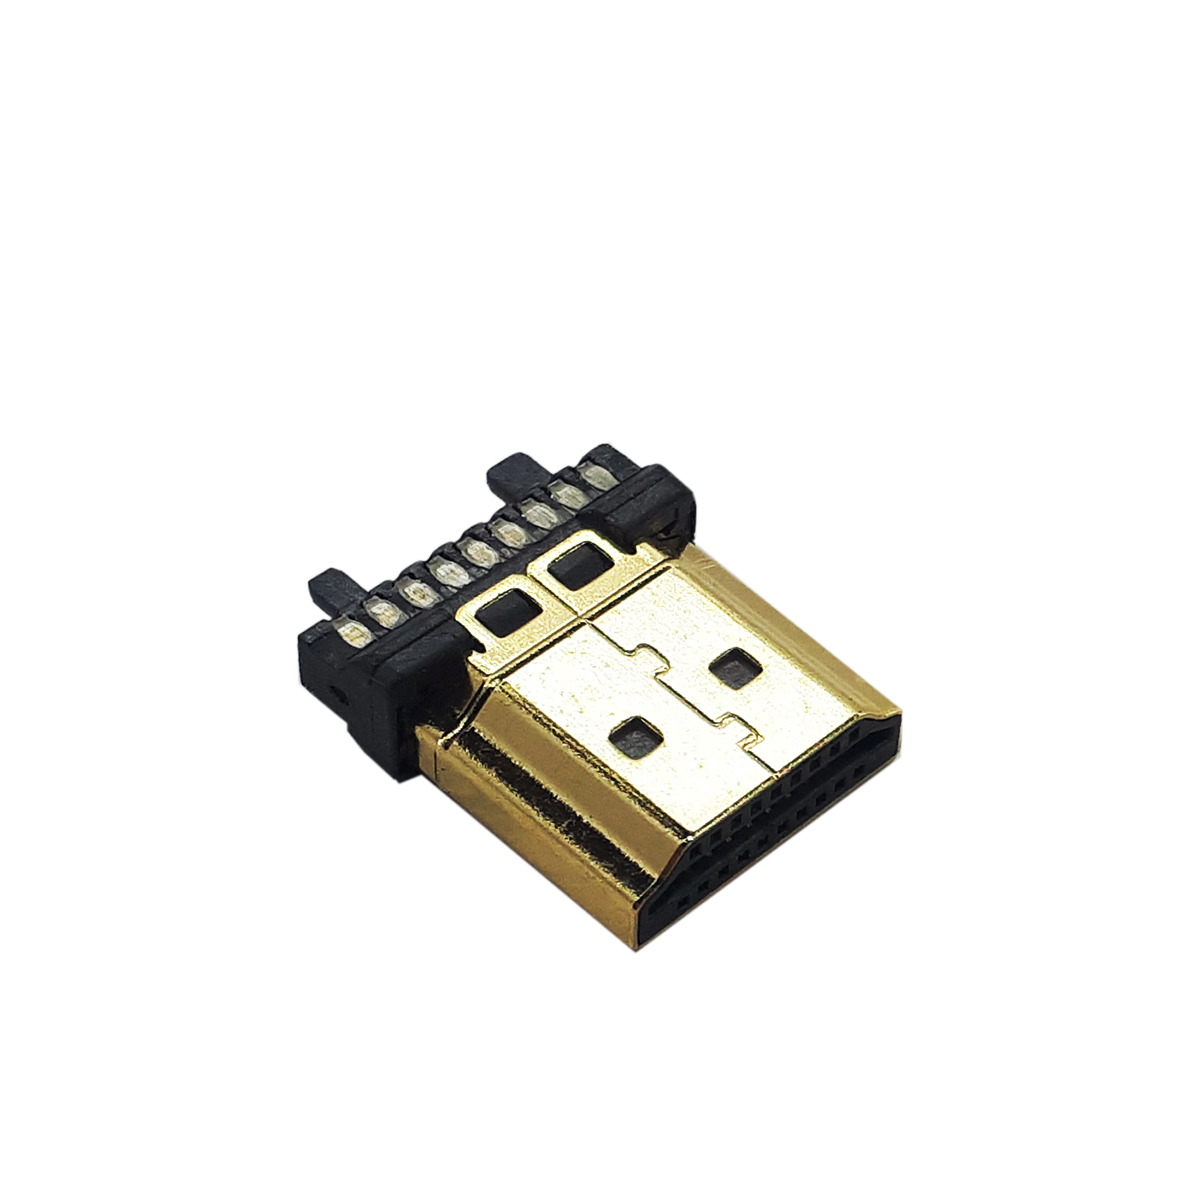 سر سوکت قابل تعویض کابل HDMI مدل 0653 بسته 2 عددی